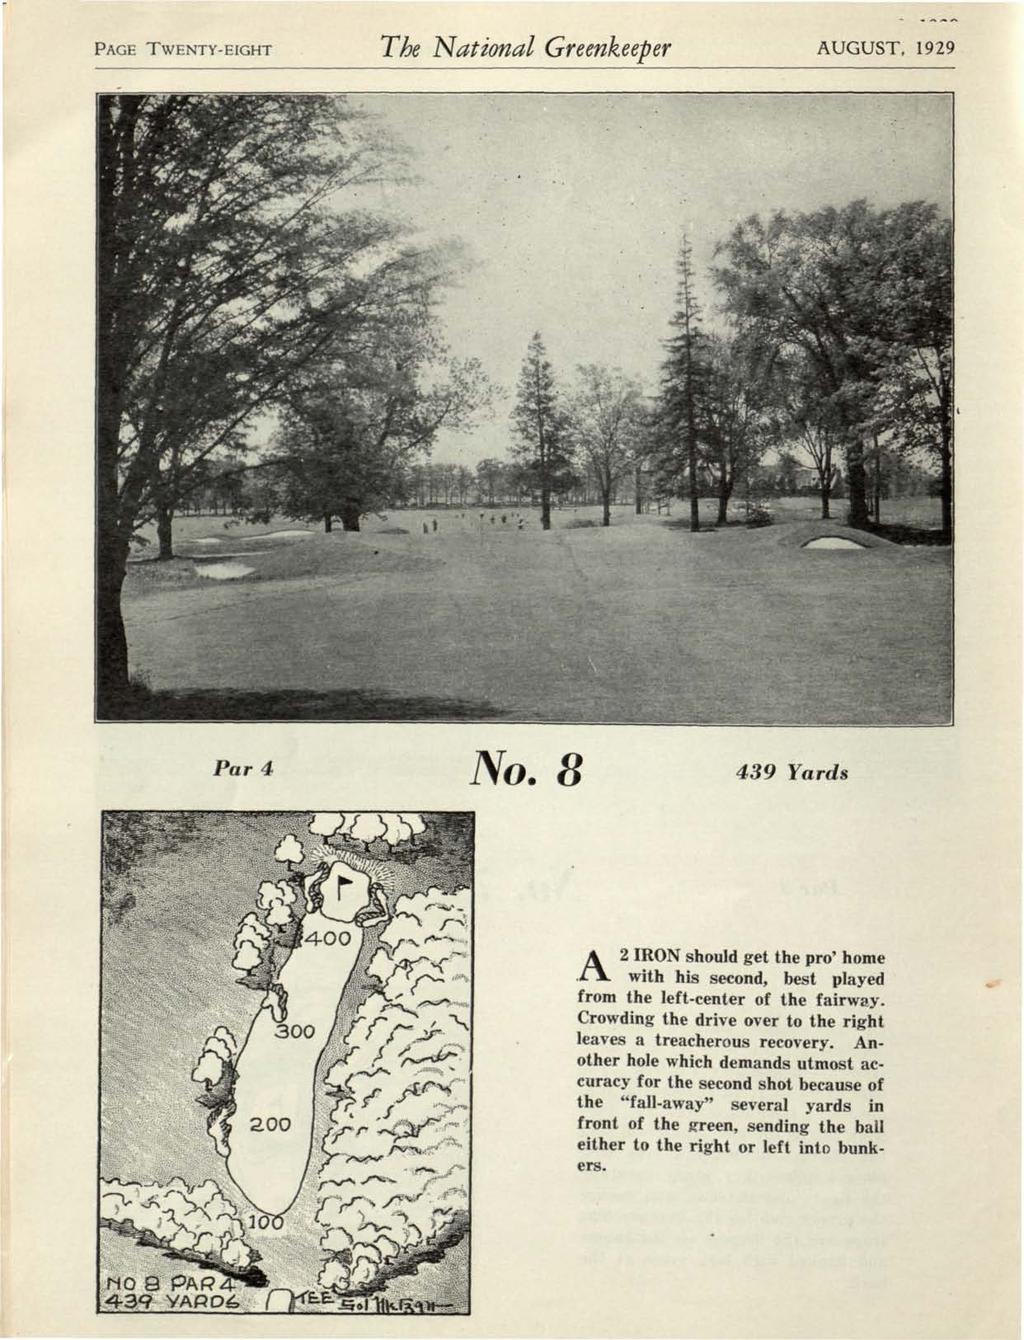 PAGE TWENTY-EIGHT The National Greenkeeper AUGUST, 1929 Par 4 No. 8 439 Yards fs zoo 300 tlfff-j^ Is/* 1 "*.